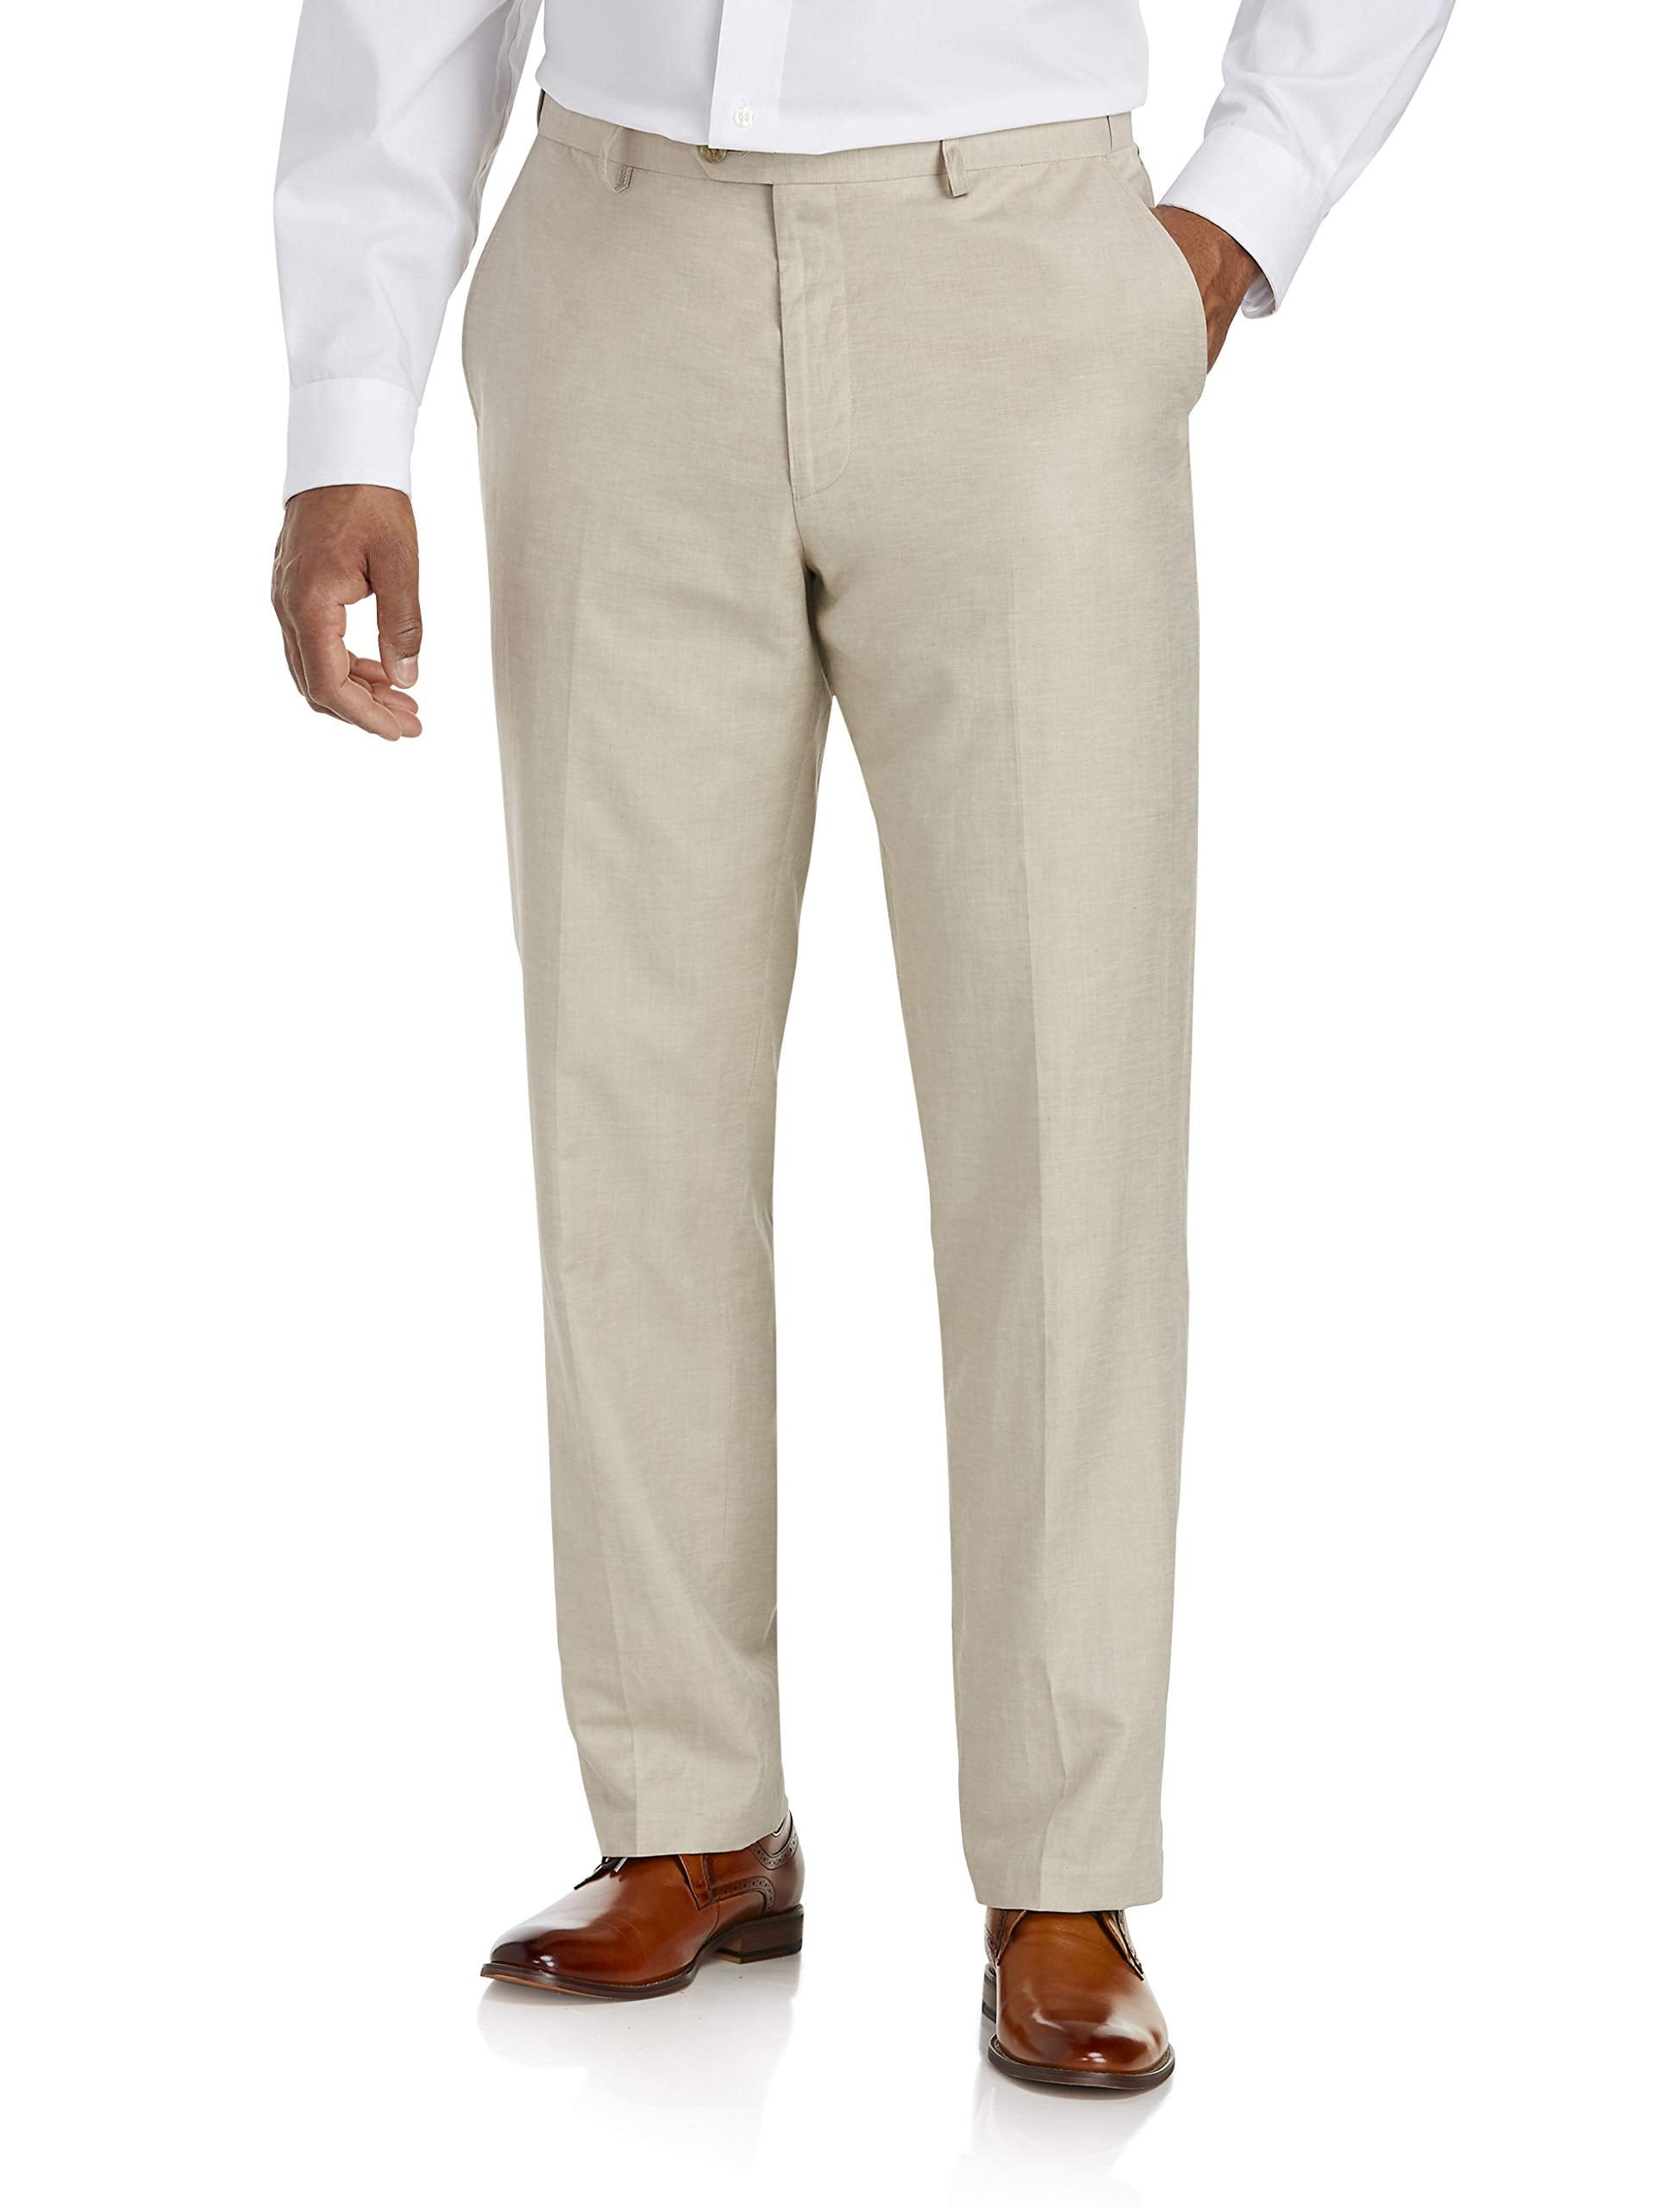 Oak Hill by DXL Big and Tall Linen-Blend Suit Pants, Flax, 48W X 30L ...